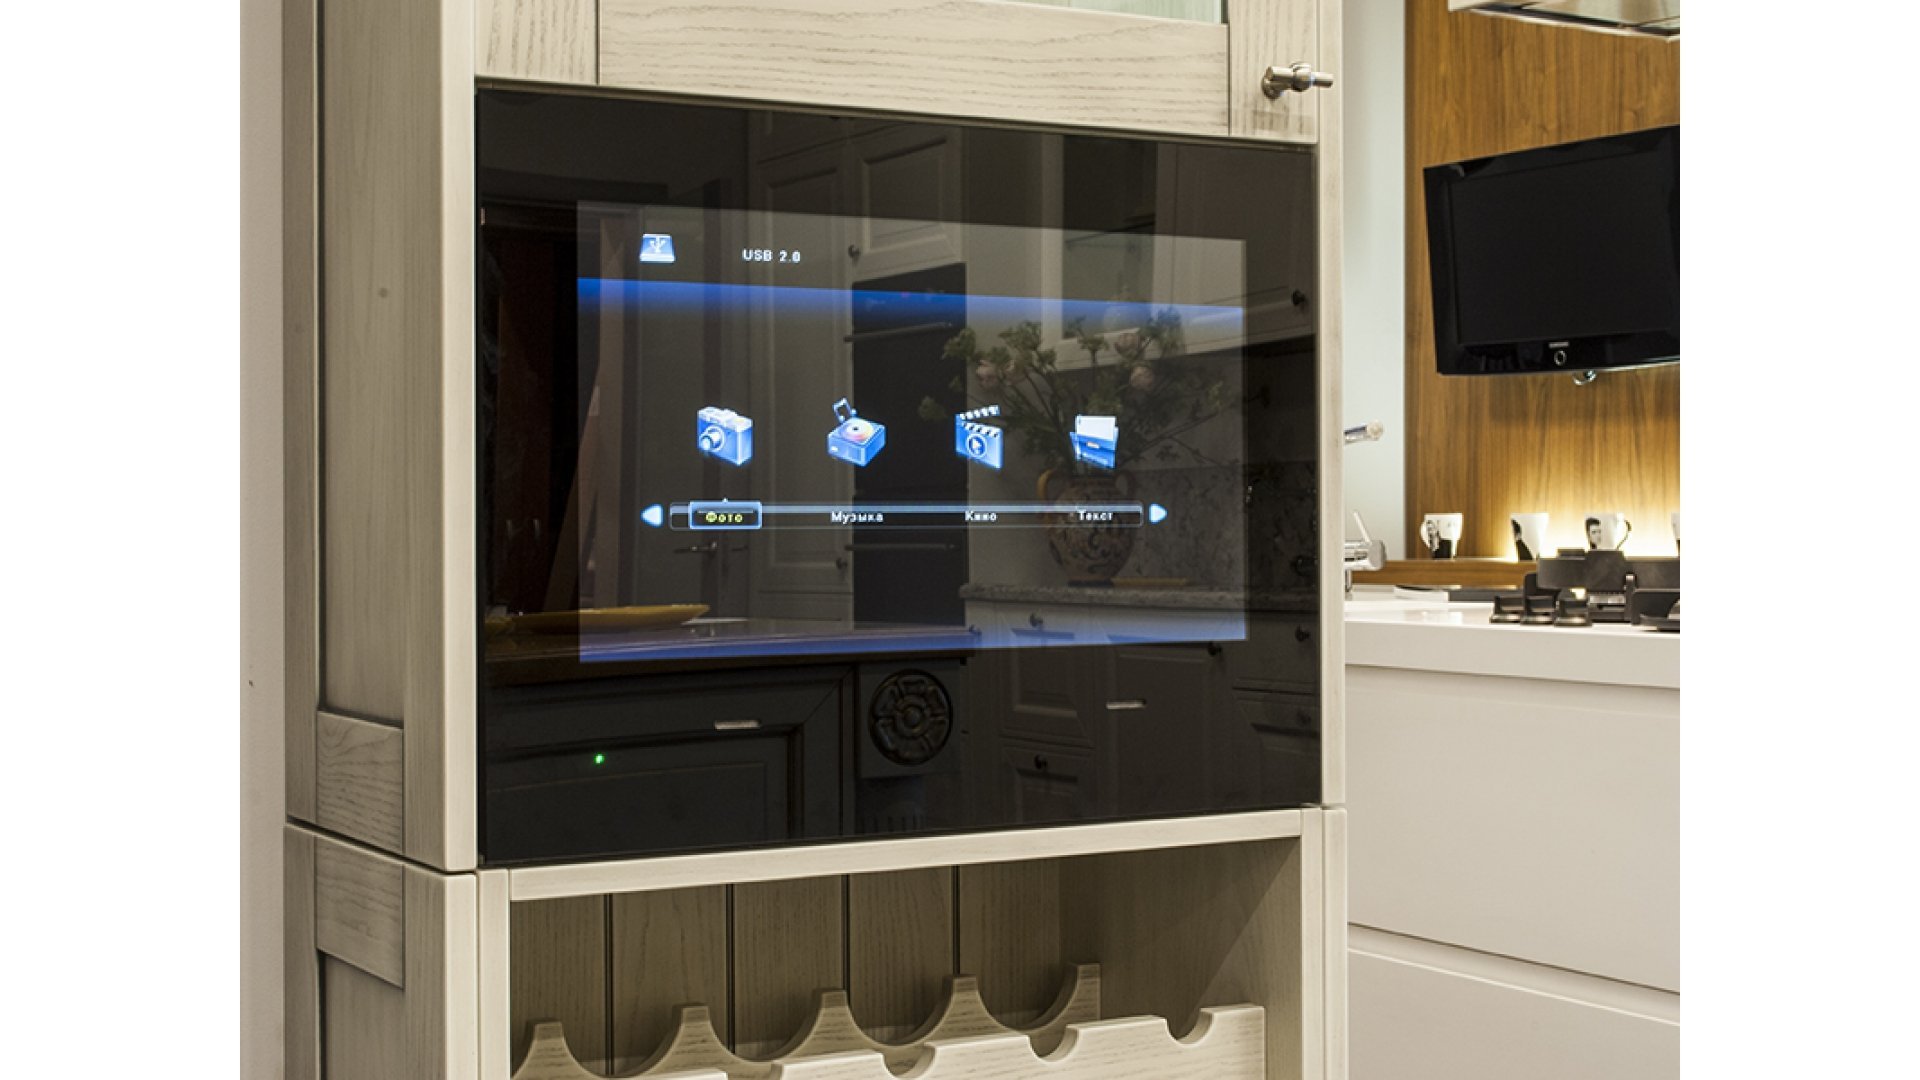 Встроенные кухонные телевизоры. Avel avs220k. Телевизор для кухни avs220k. Телевизор Avel встраиваемый для кухни. Телевизор встроенный в кухню.